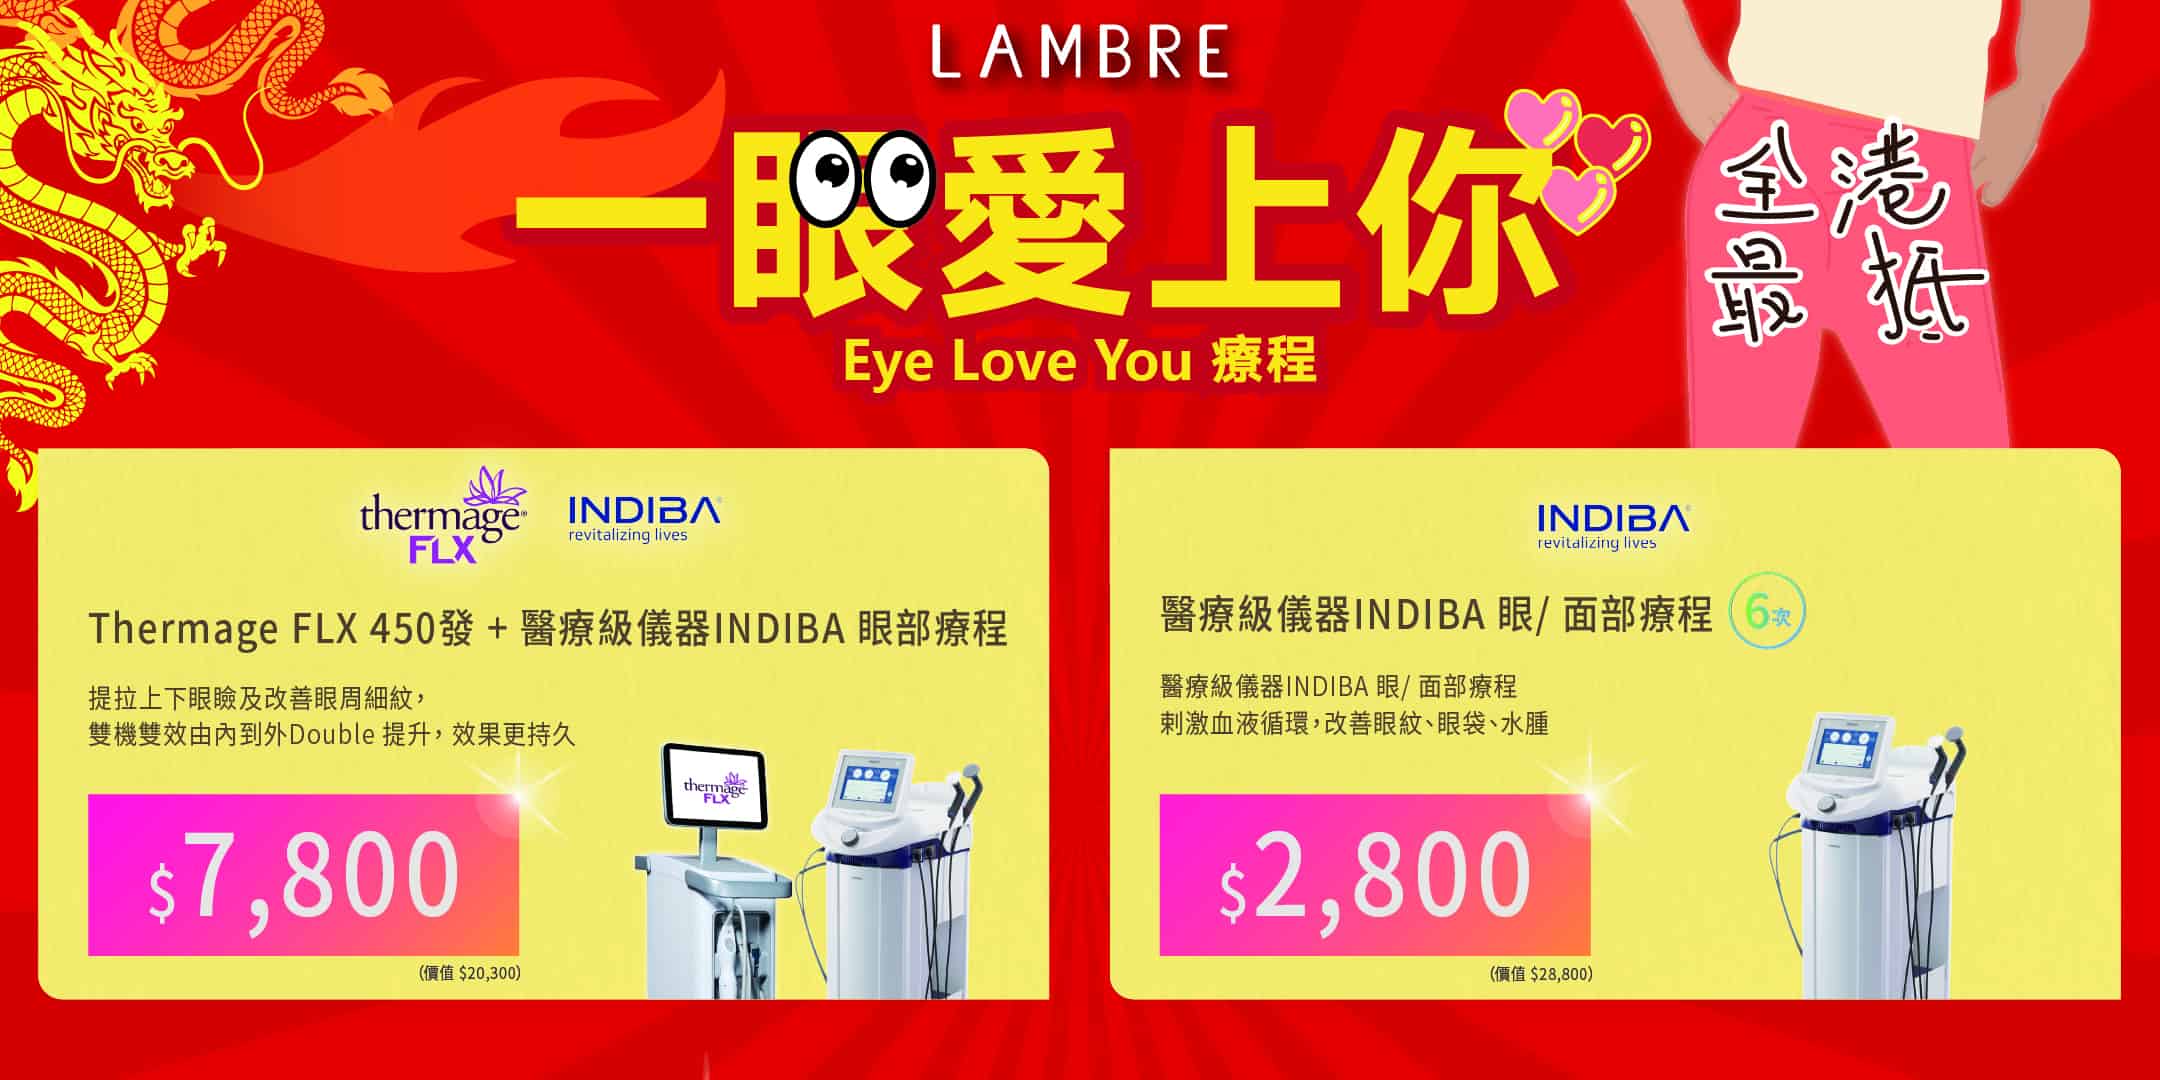 Eye Love You 一眼愛上你療程 YouTube ad